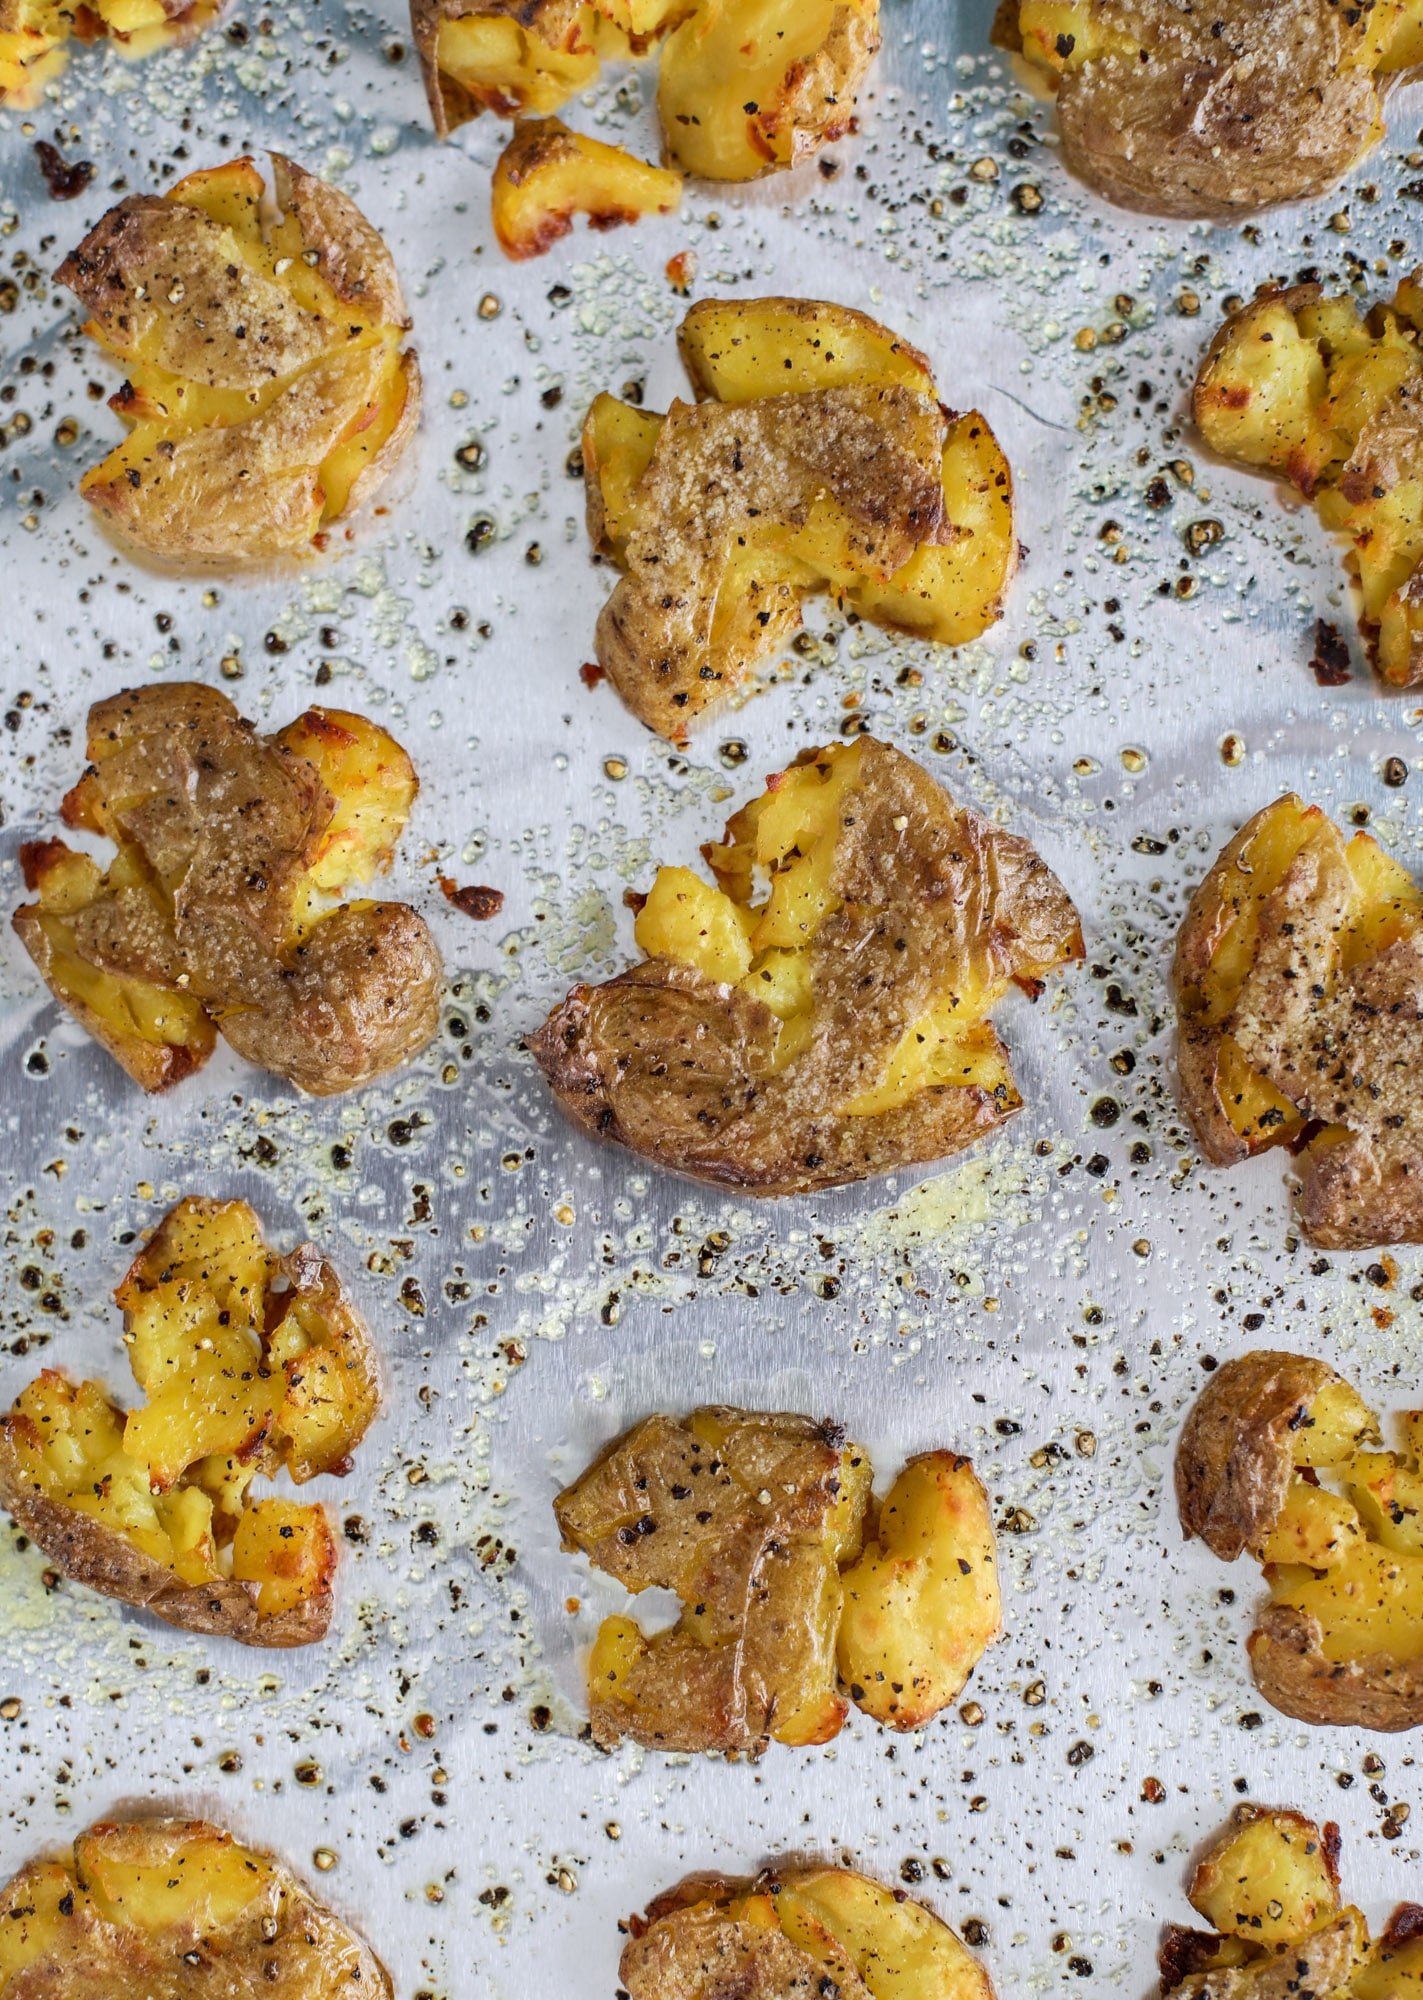 Crispy Smashed Potatoes Recipe - Cookie and Kate